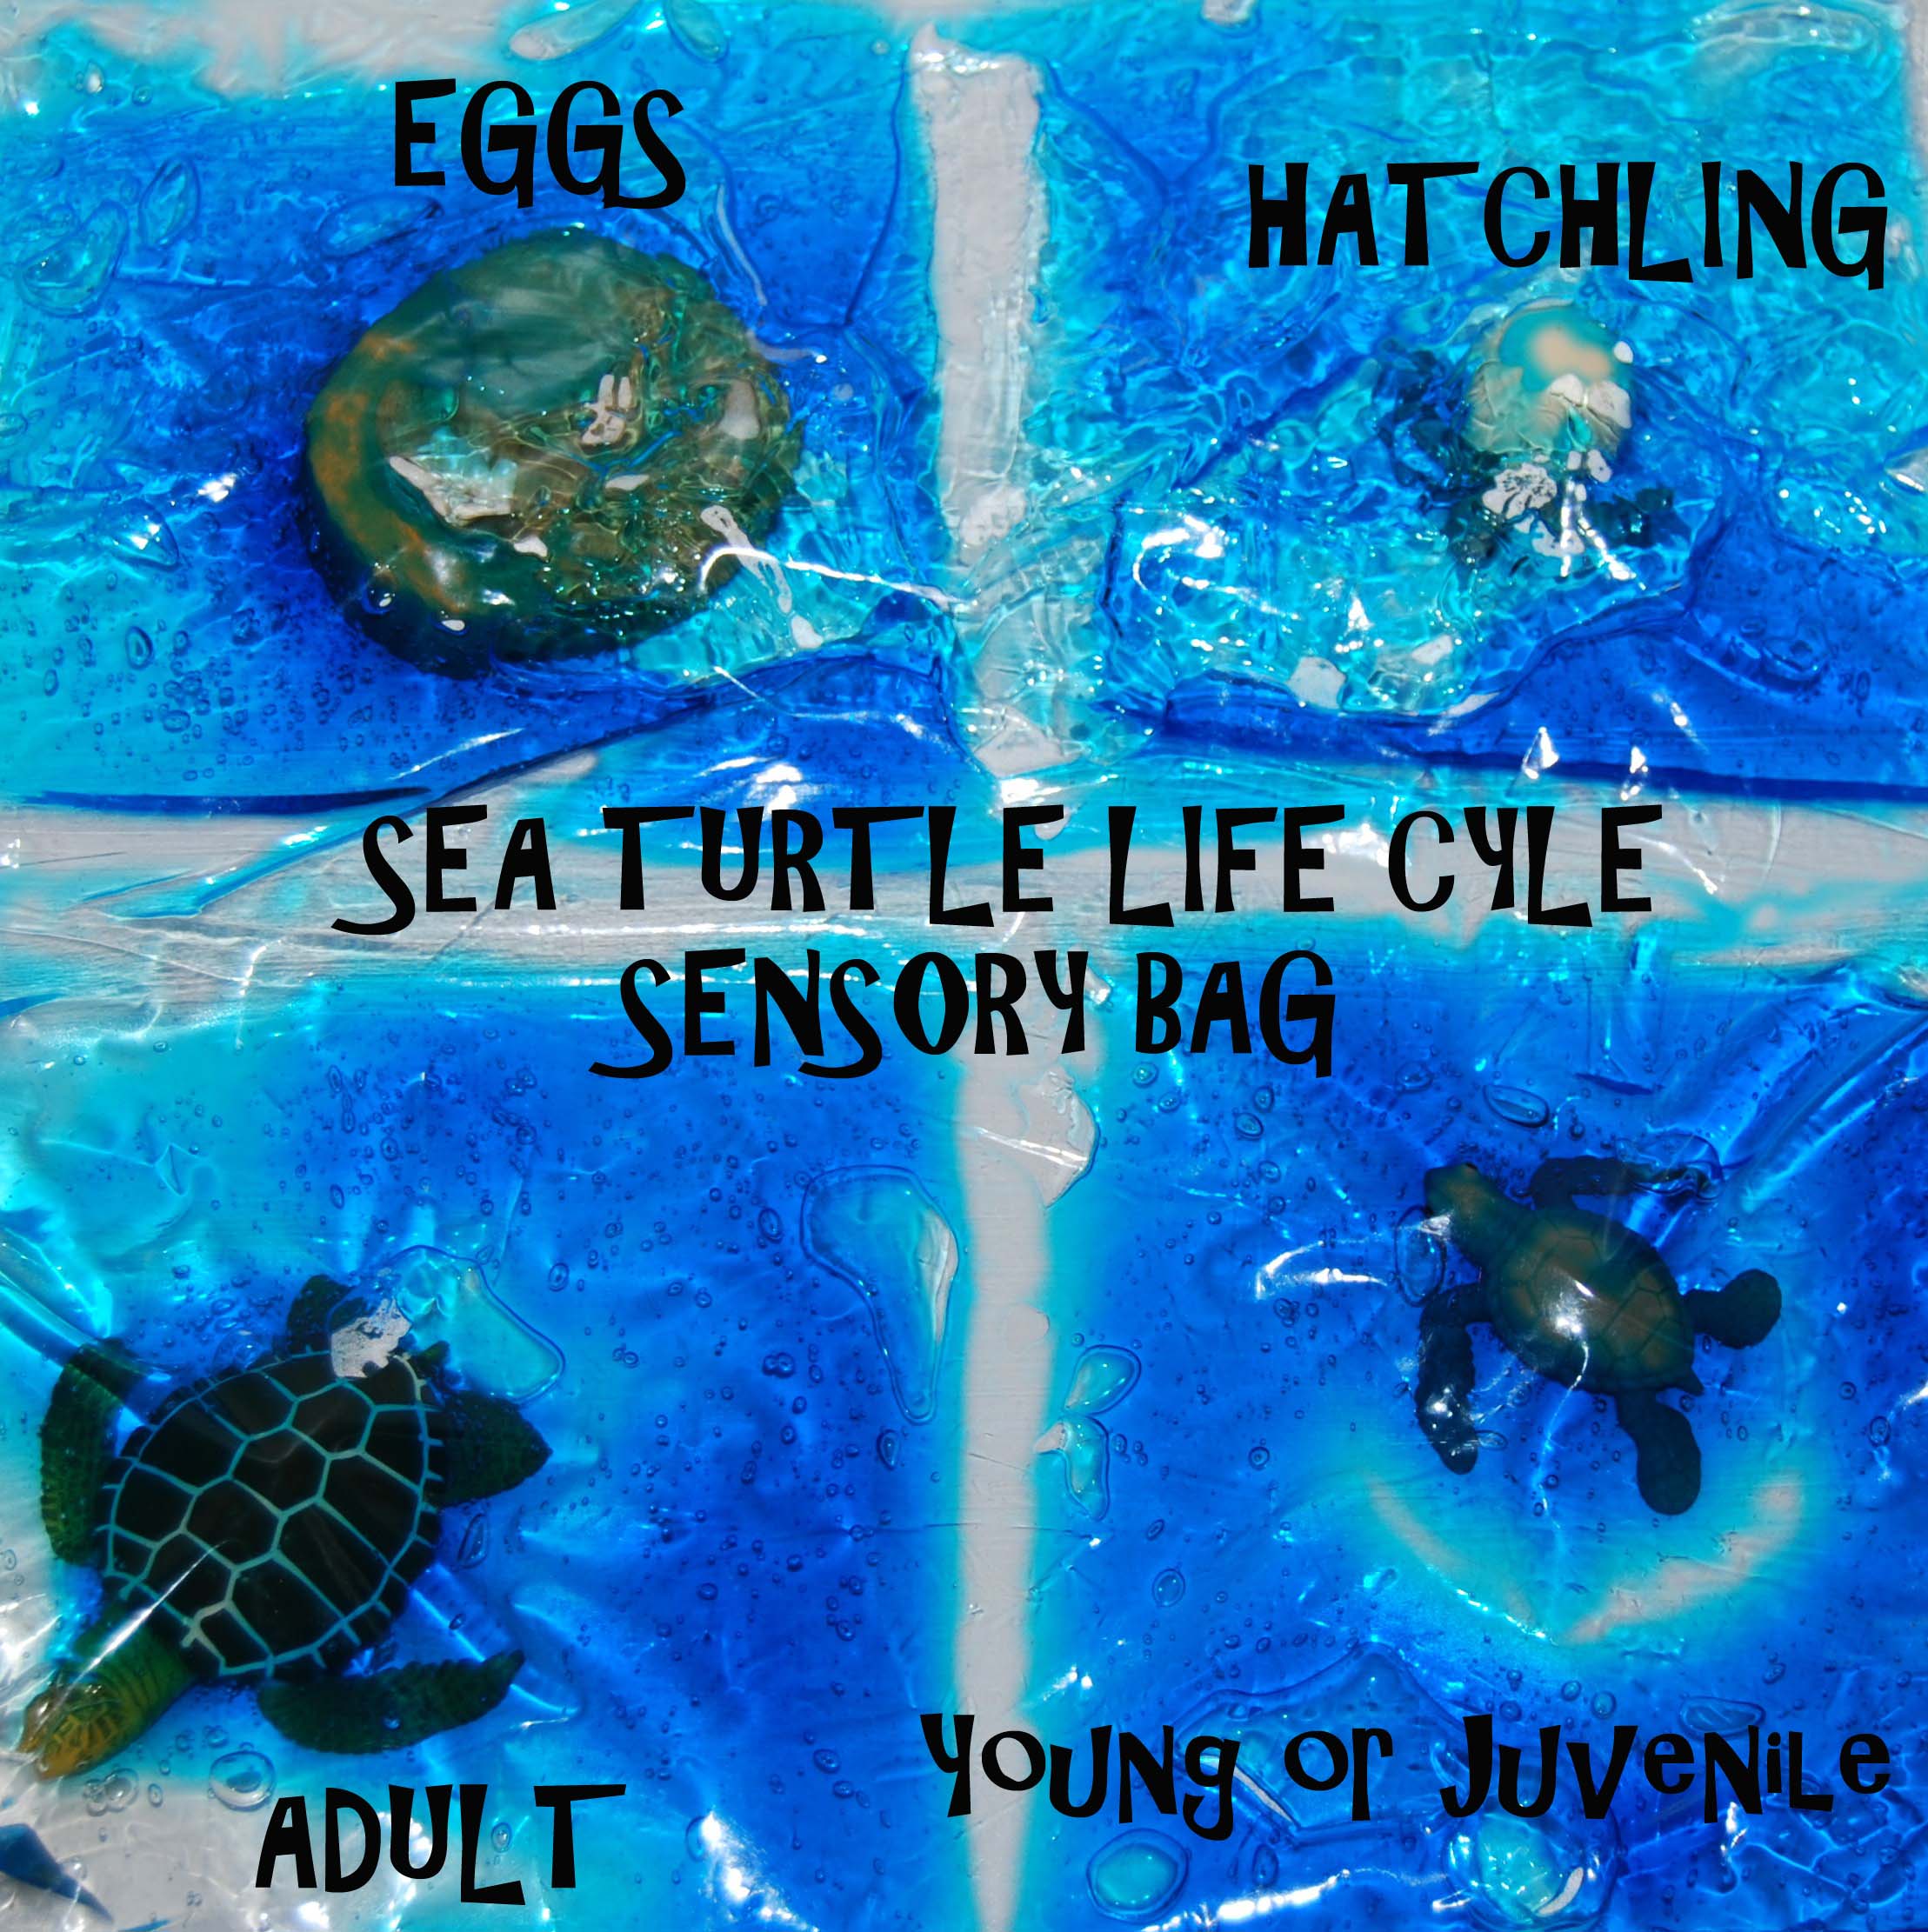 Sea Turtle Sensory Bag • The Preschool Toolbox Blog